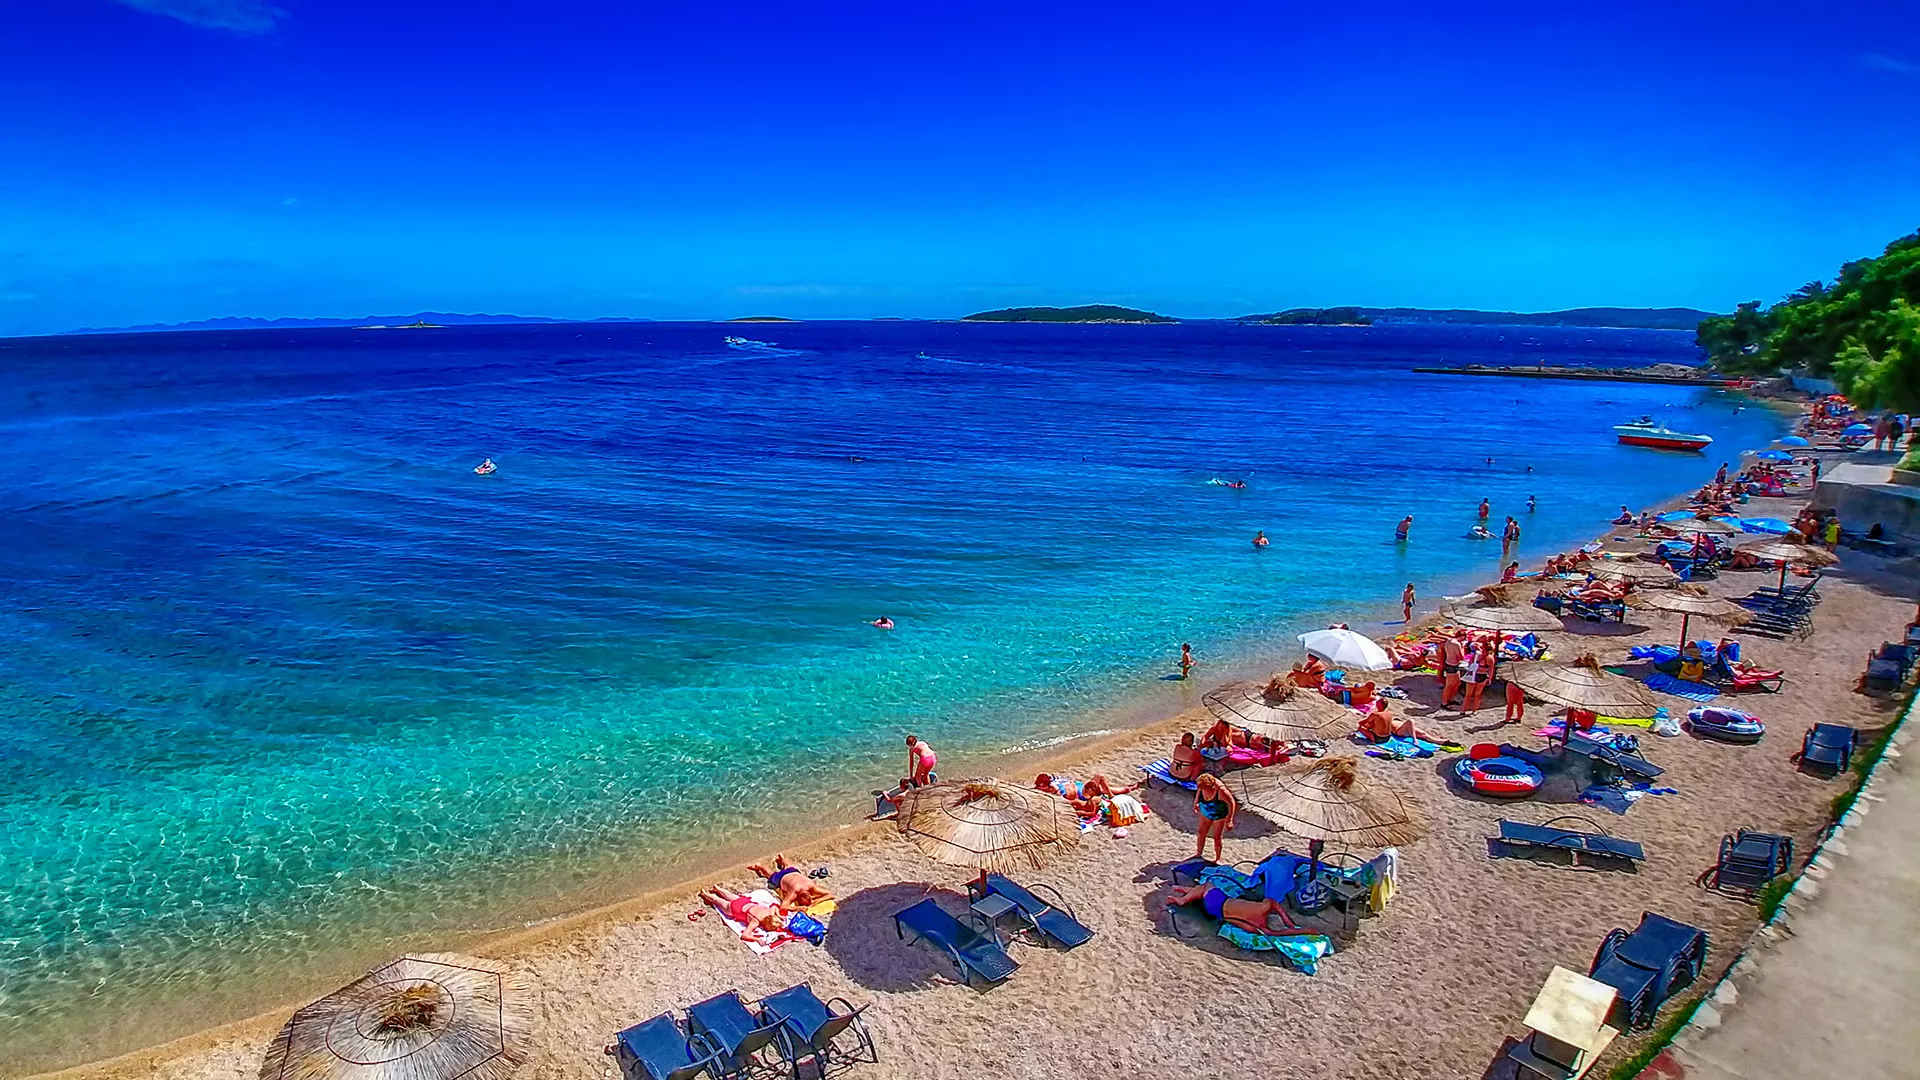 Beach Trstenica in Croatia, Europe | Beaches - Rated 3.5